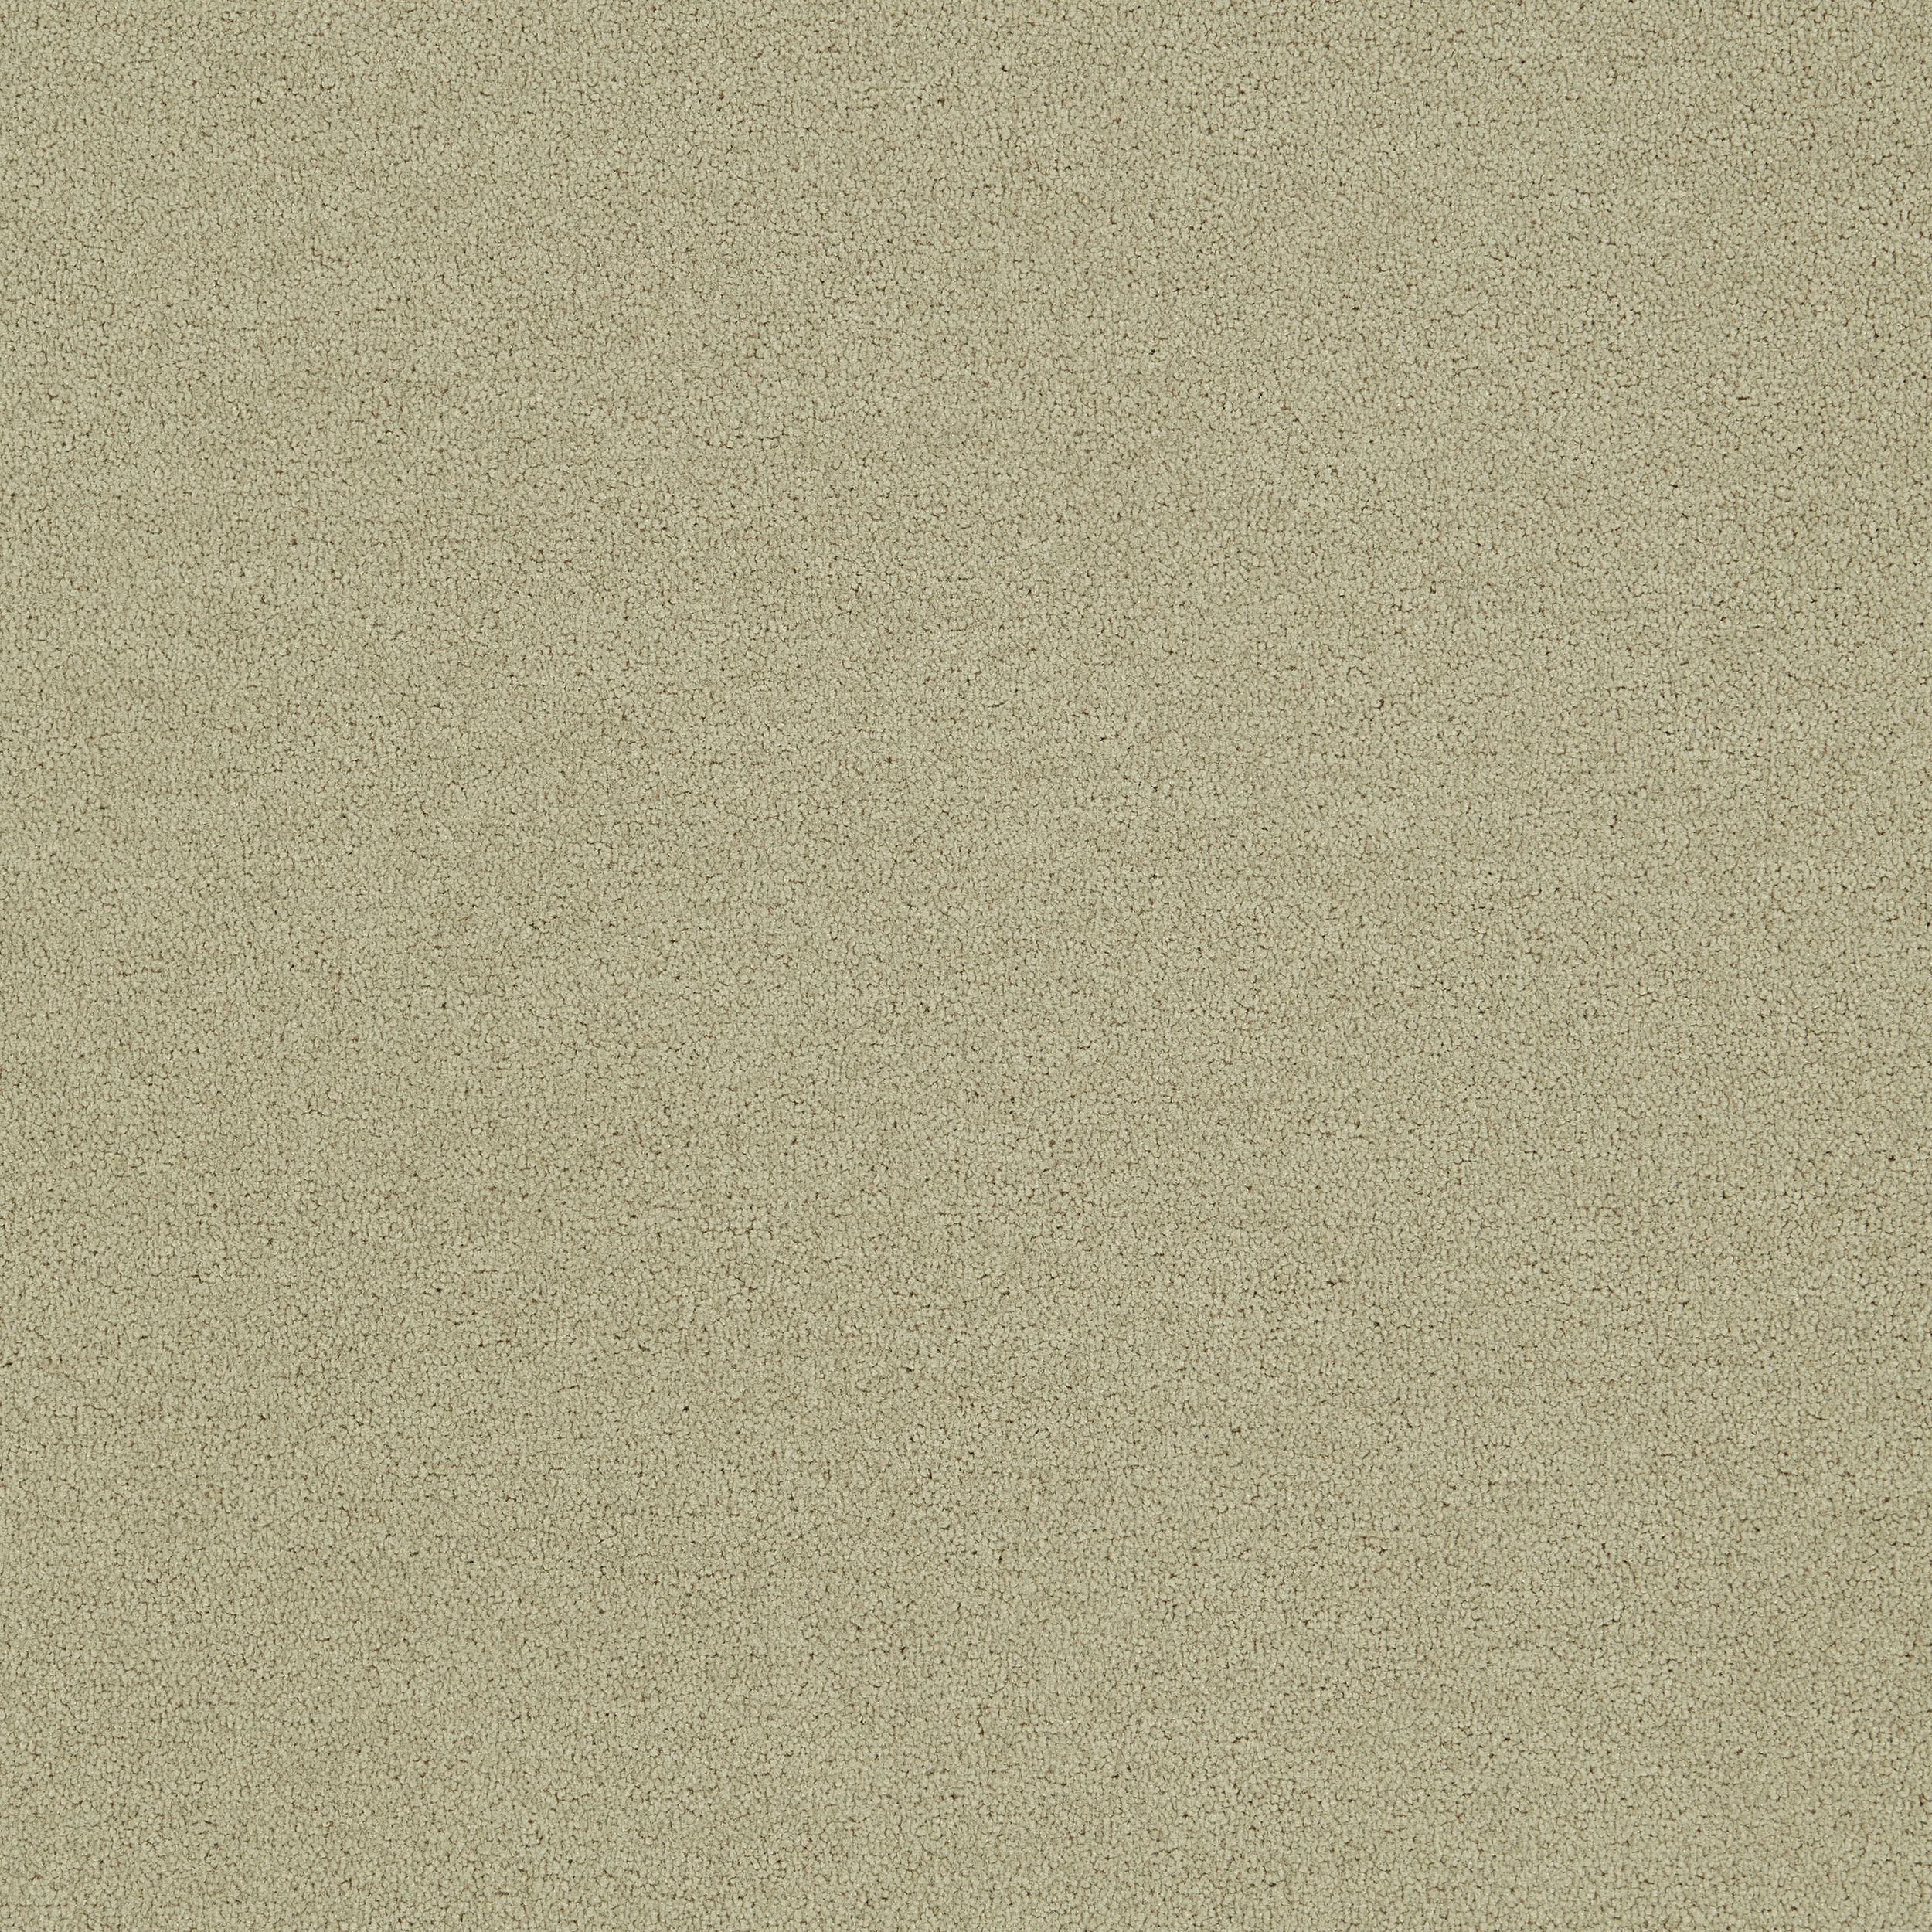 Polichrome Solid Carpet Tile In Turtledove número de imagen 2